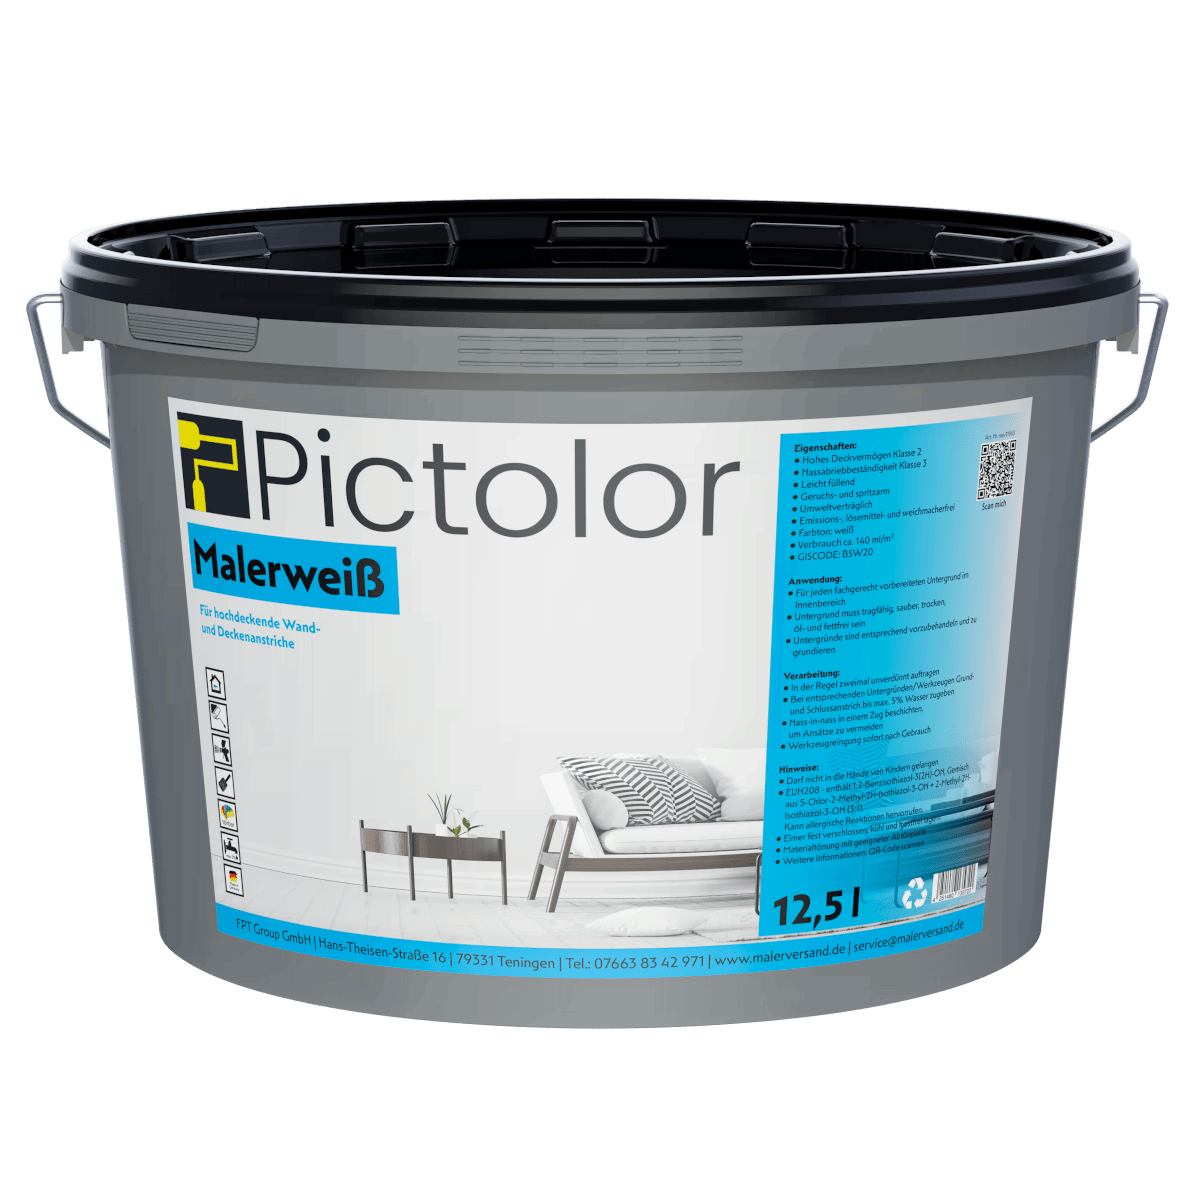 Pictolor® Malerweiß Wandfarbe von Pictolor